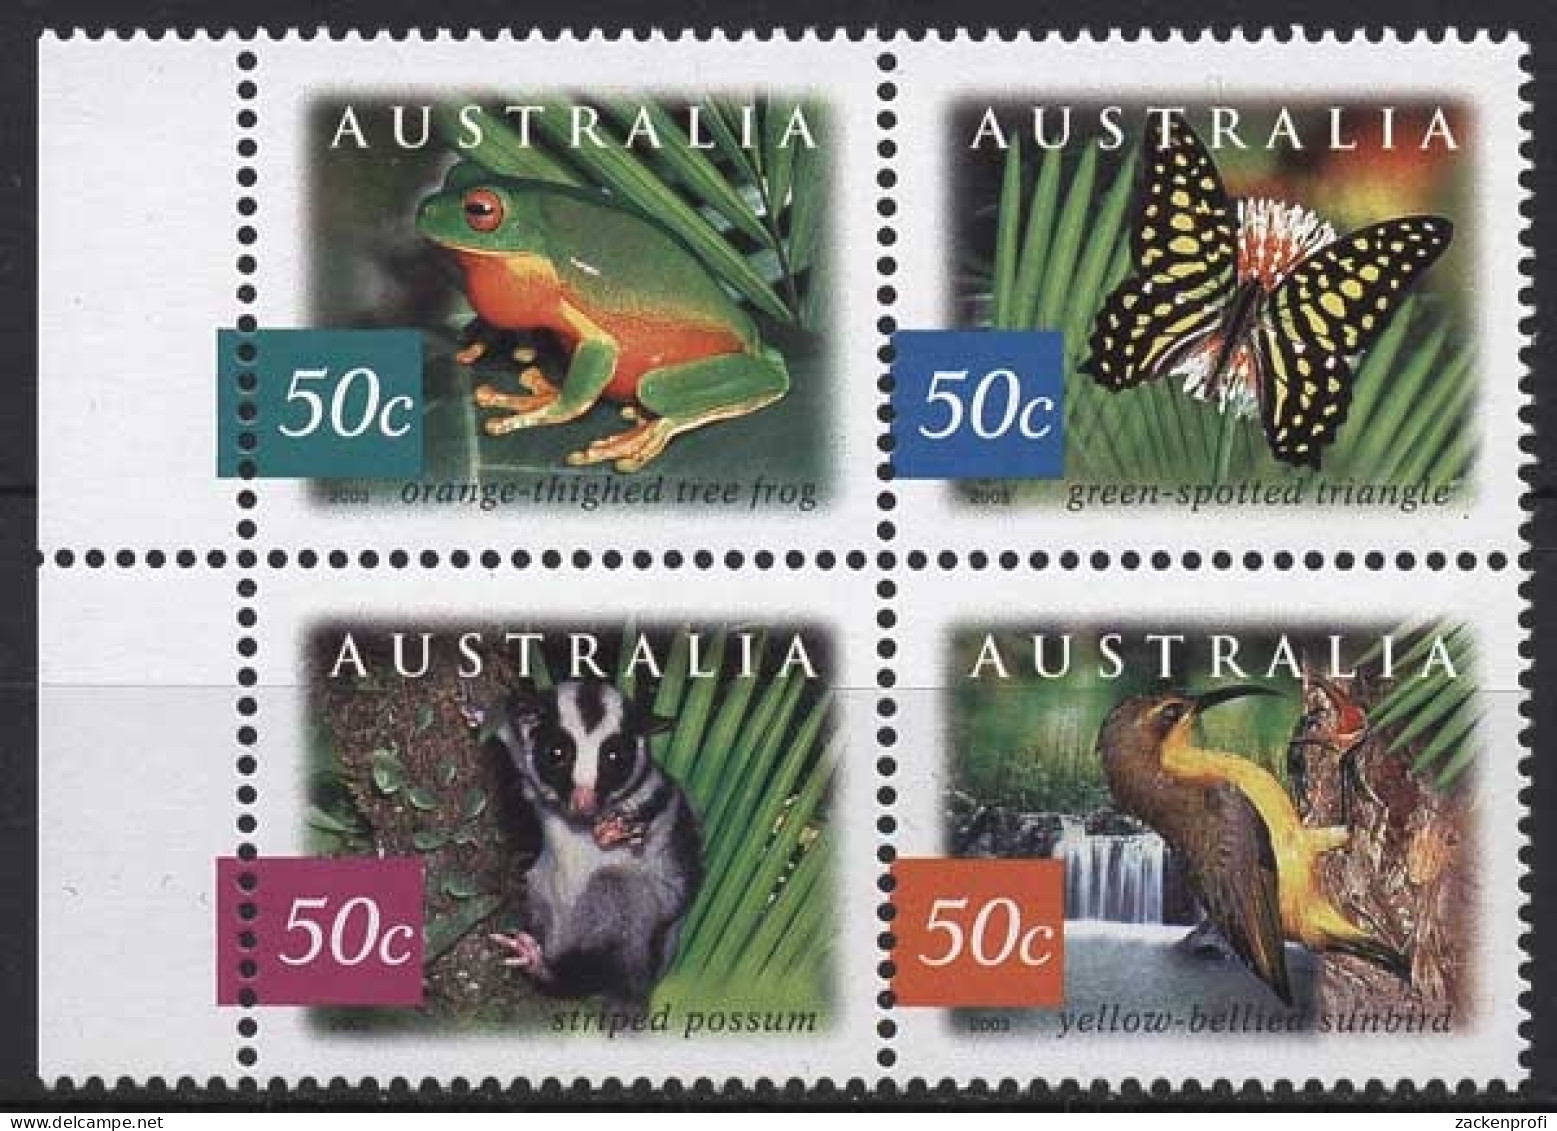 Australien 2003 Regenwald Tiere Frosch Schmetterling 2237/40 ZD Postfrisch - Ongebruikt